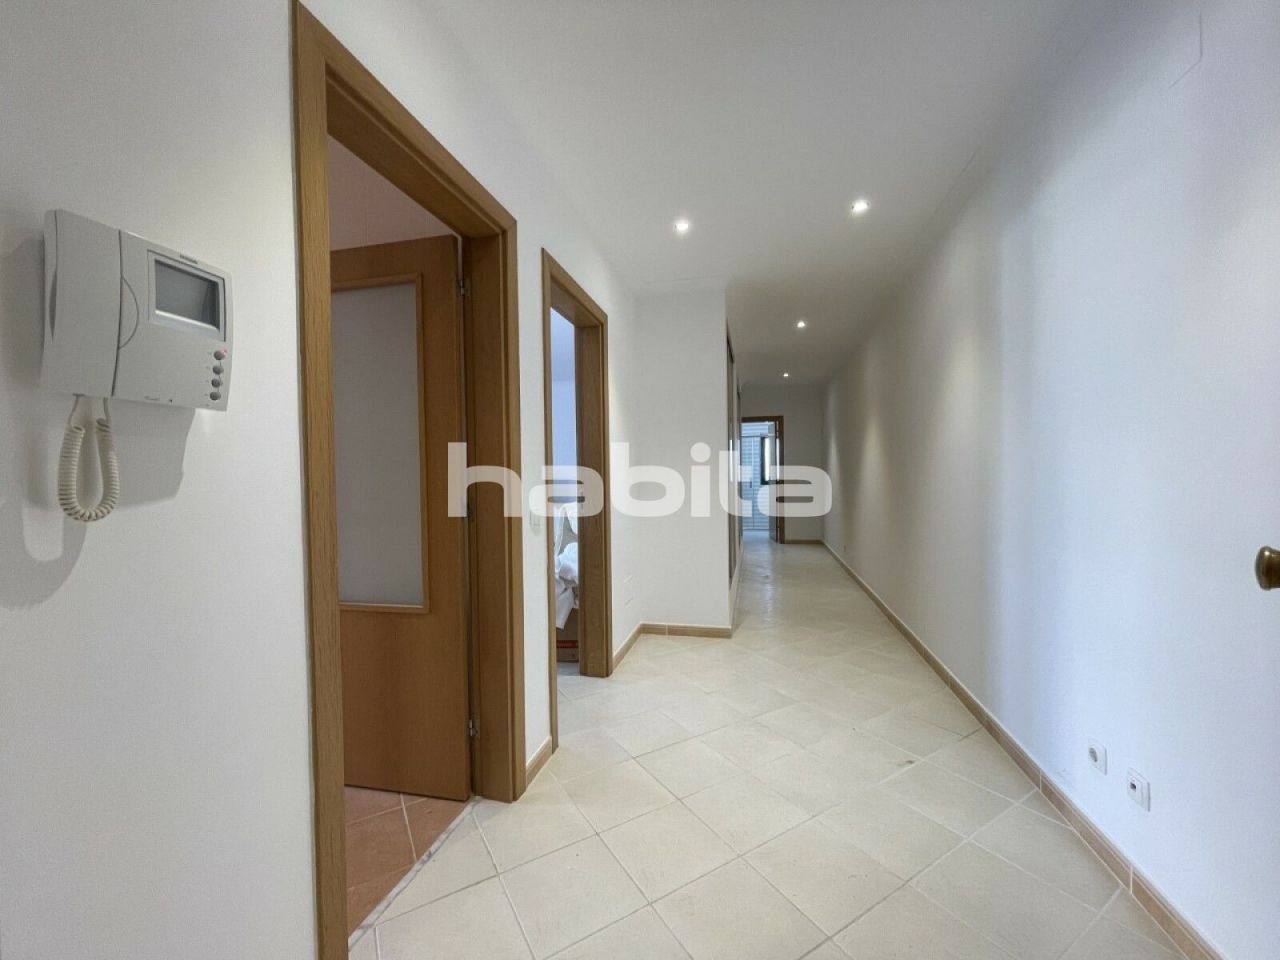 Apartment in Portimão, Portugal, 88.73 m2 - Foto 1